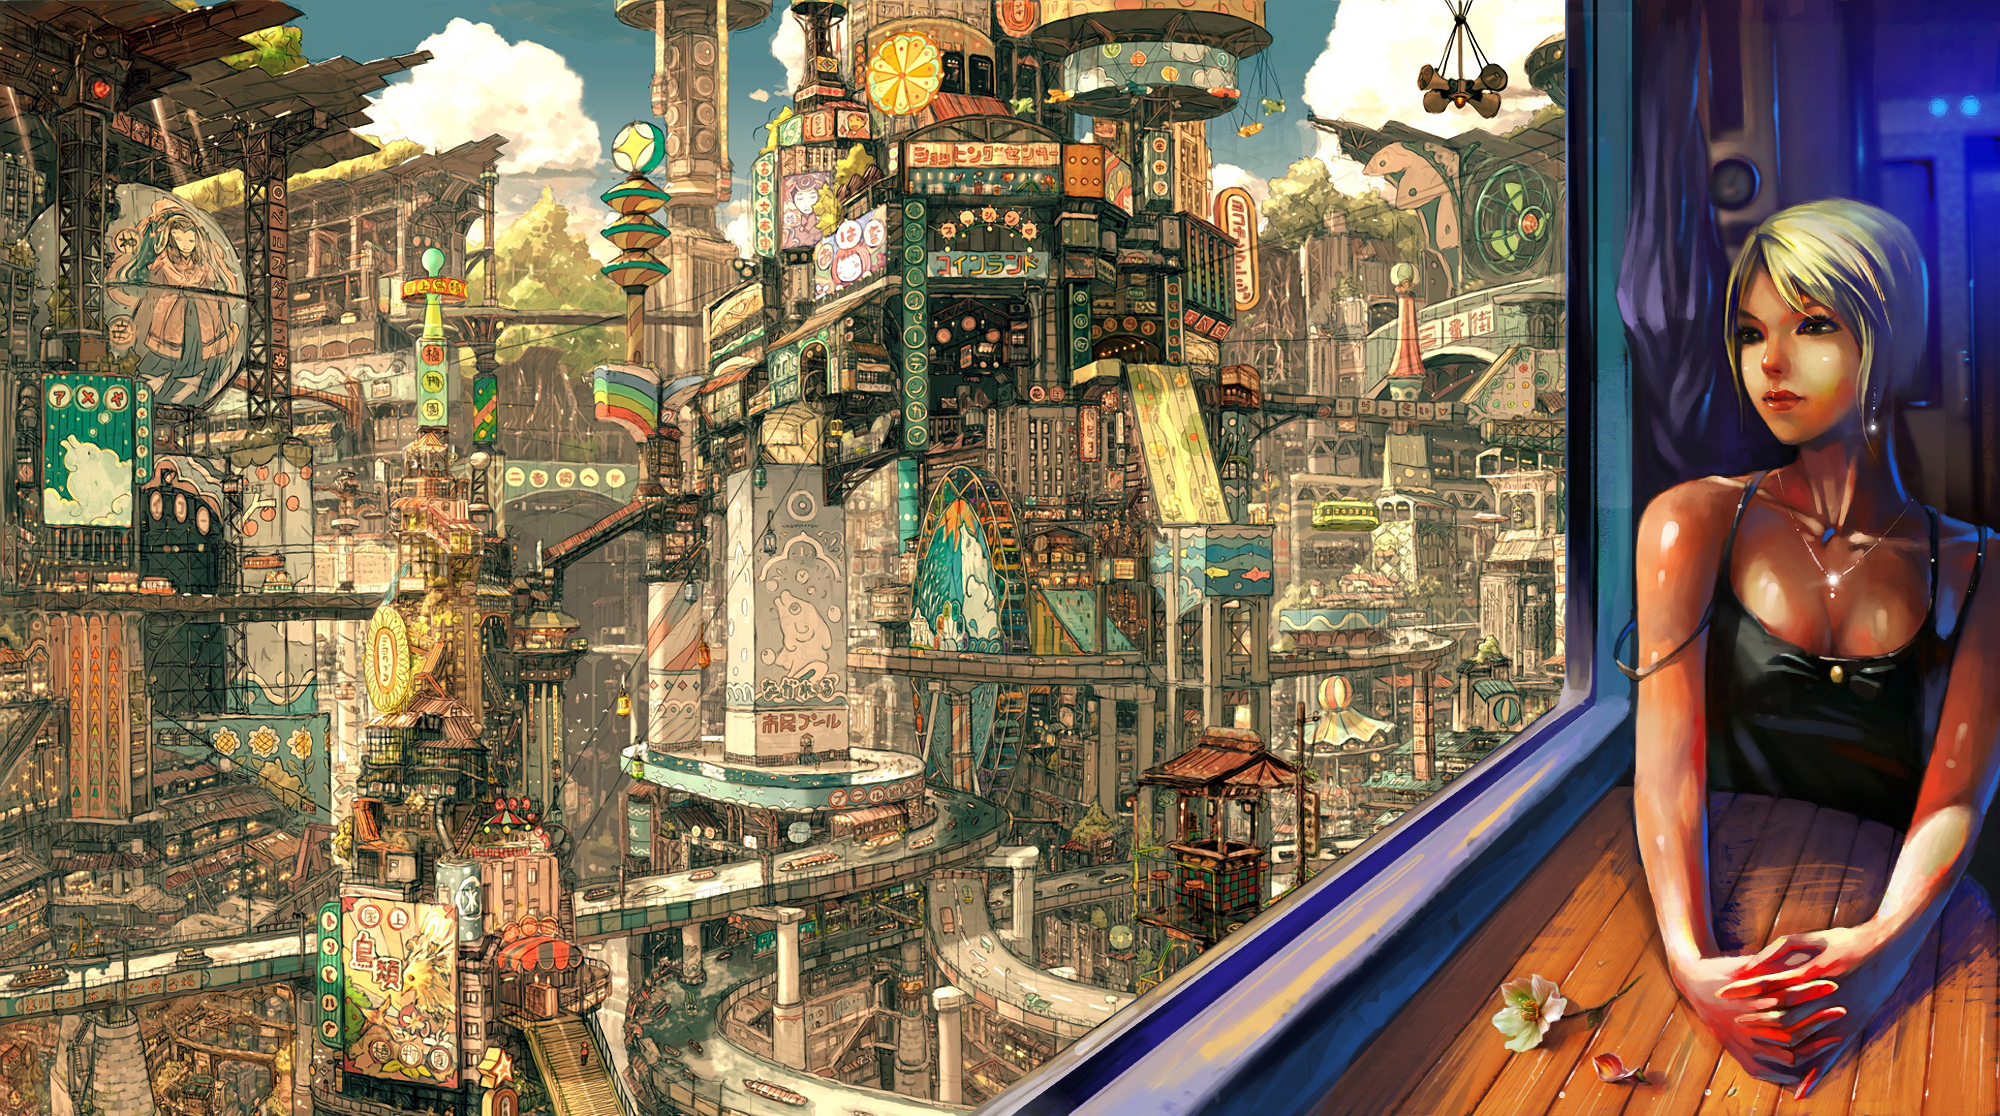 Steampunk Widescreen image